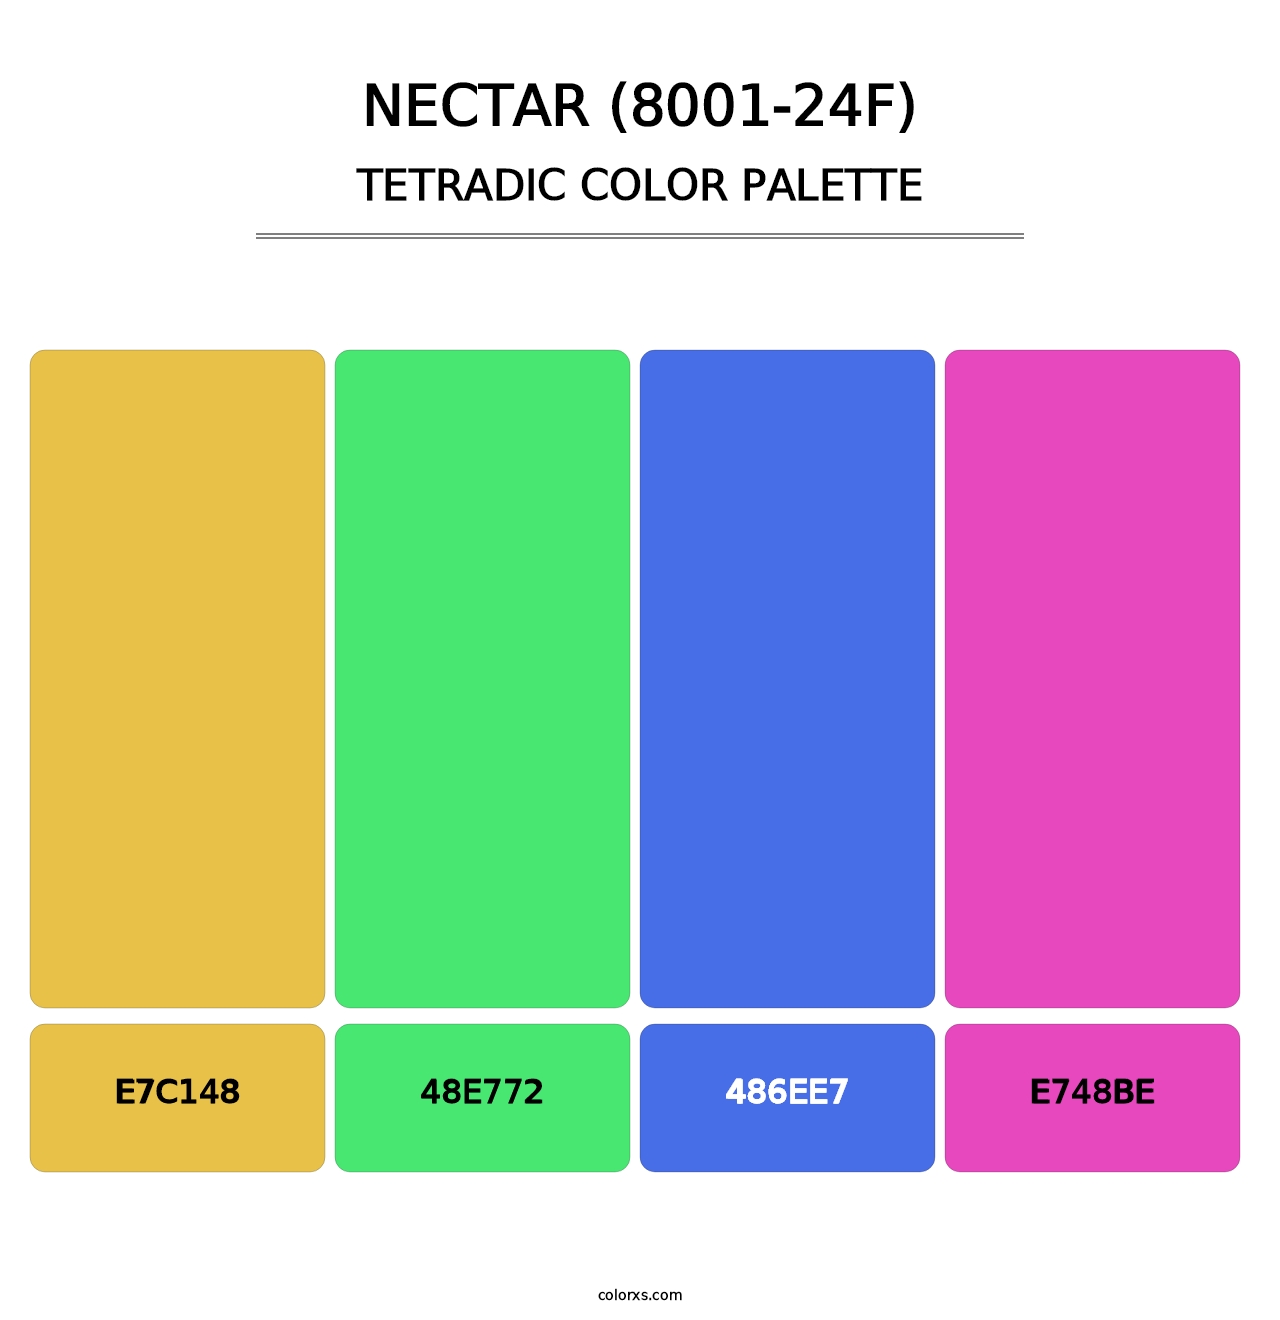 Nectar (8001-24F) - Tetradic Color Palette